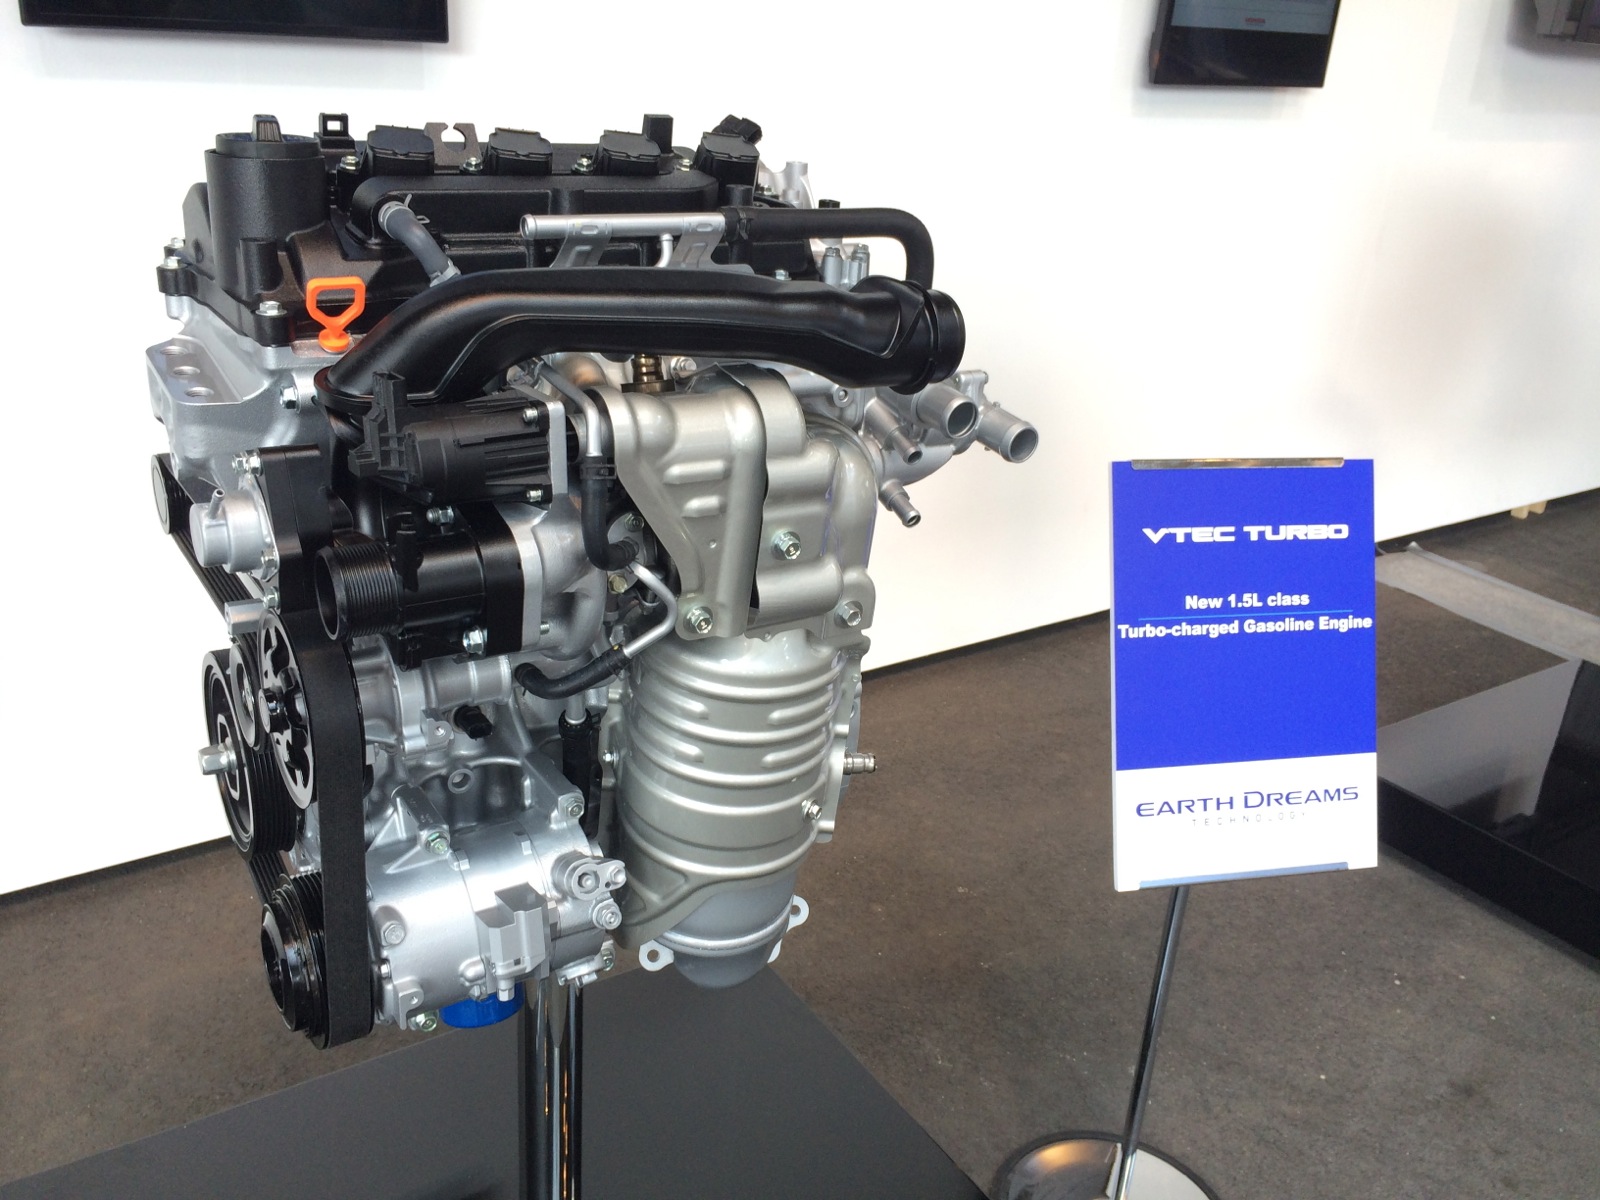 Honda unveils turbocharged 1.0L, 1.5L petrol engines